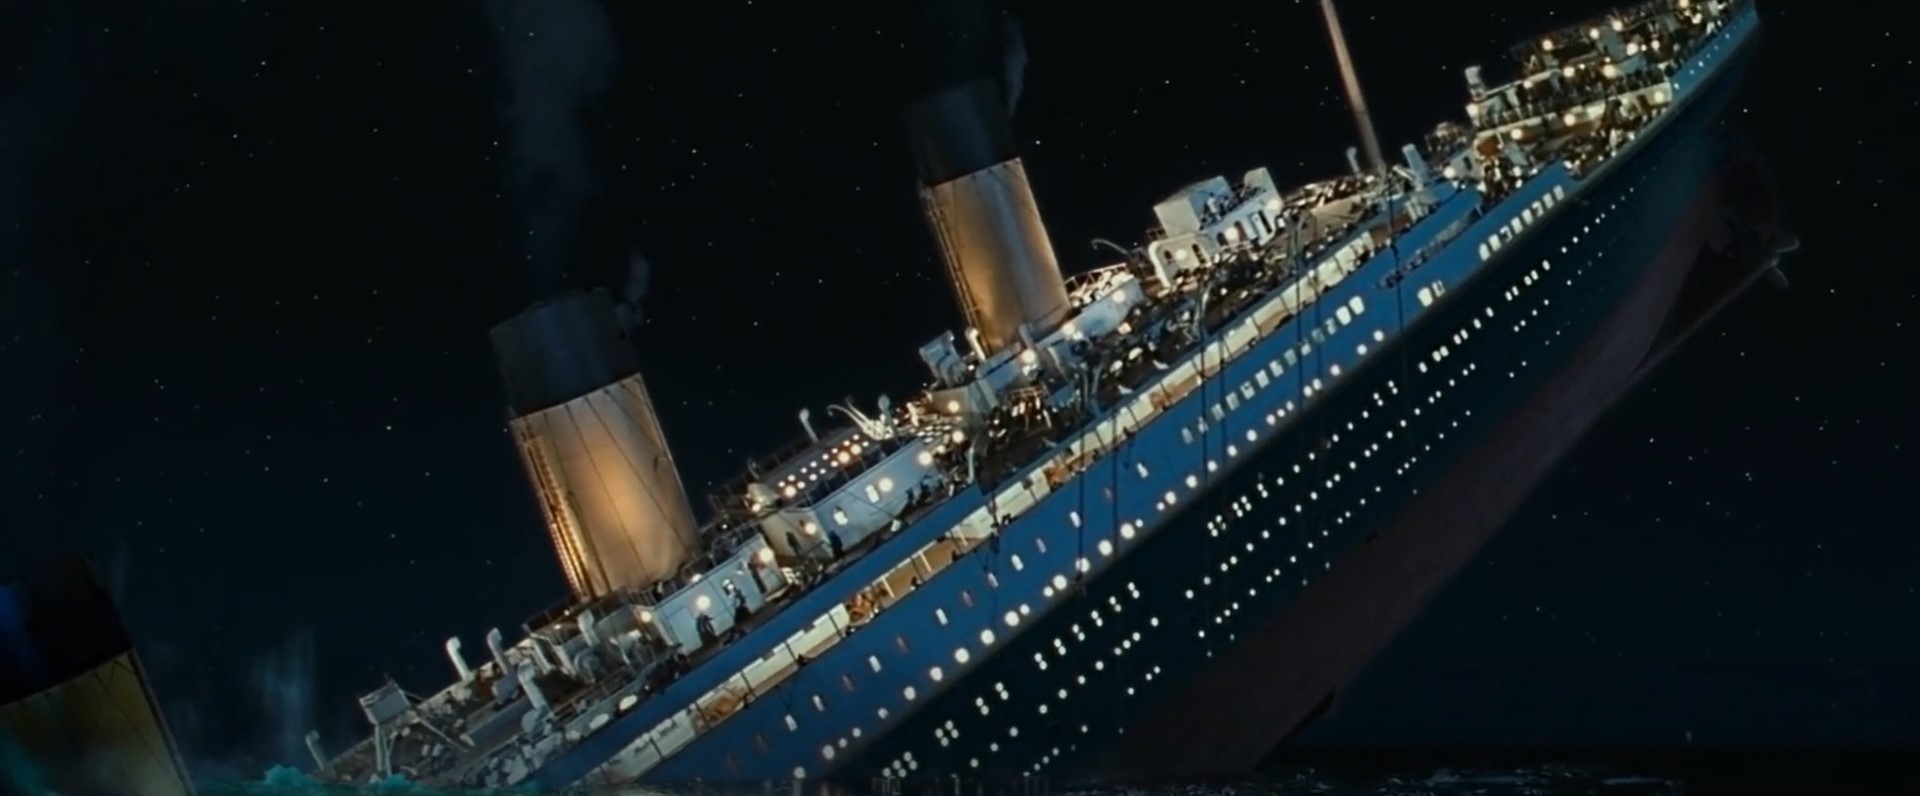 Is titanic a true story